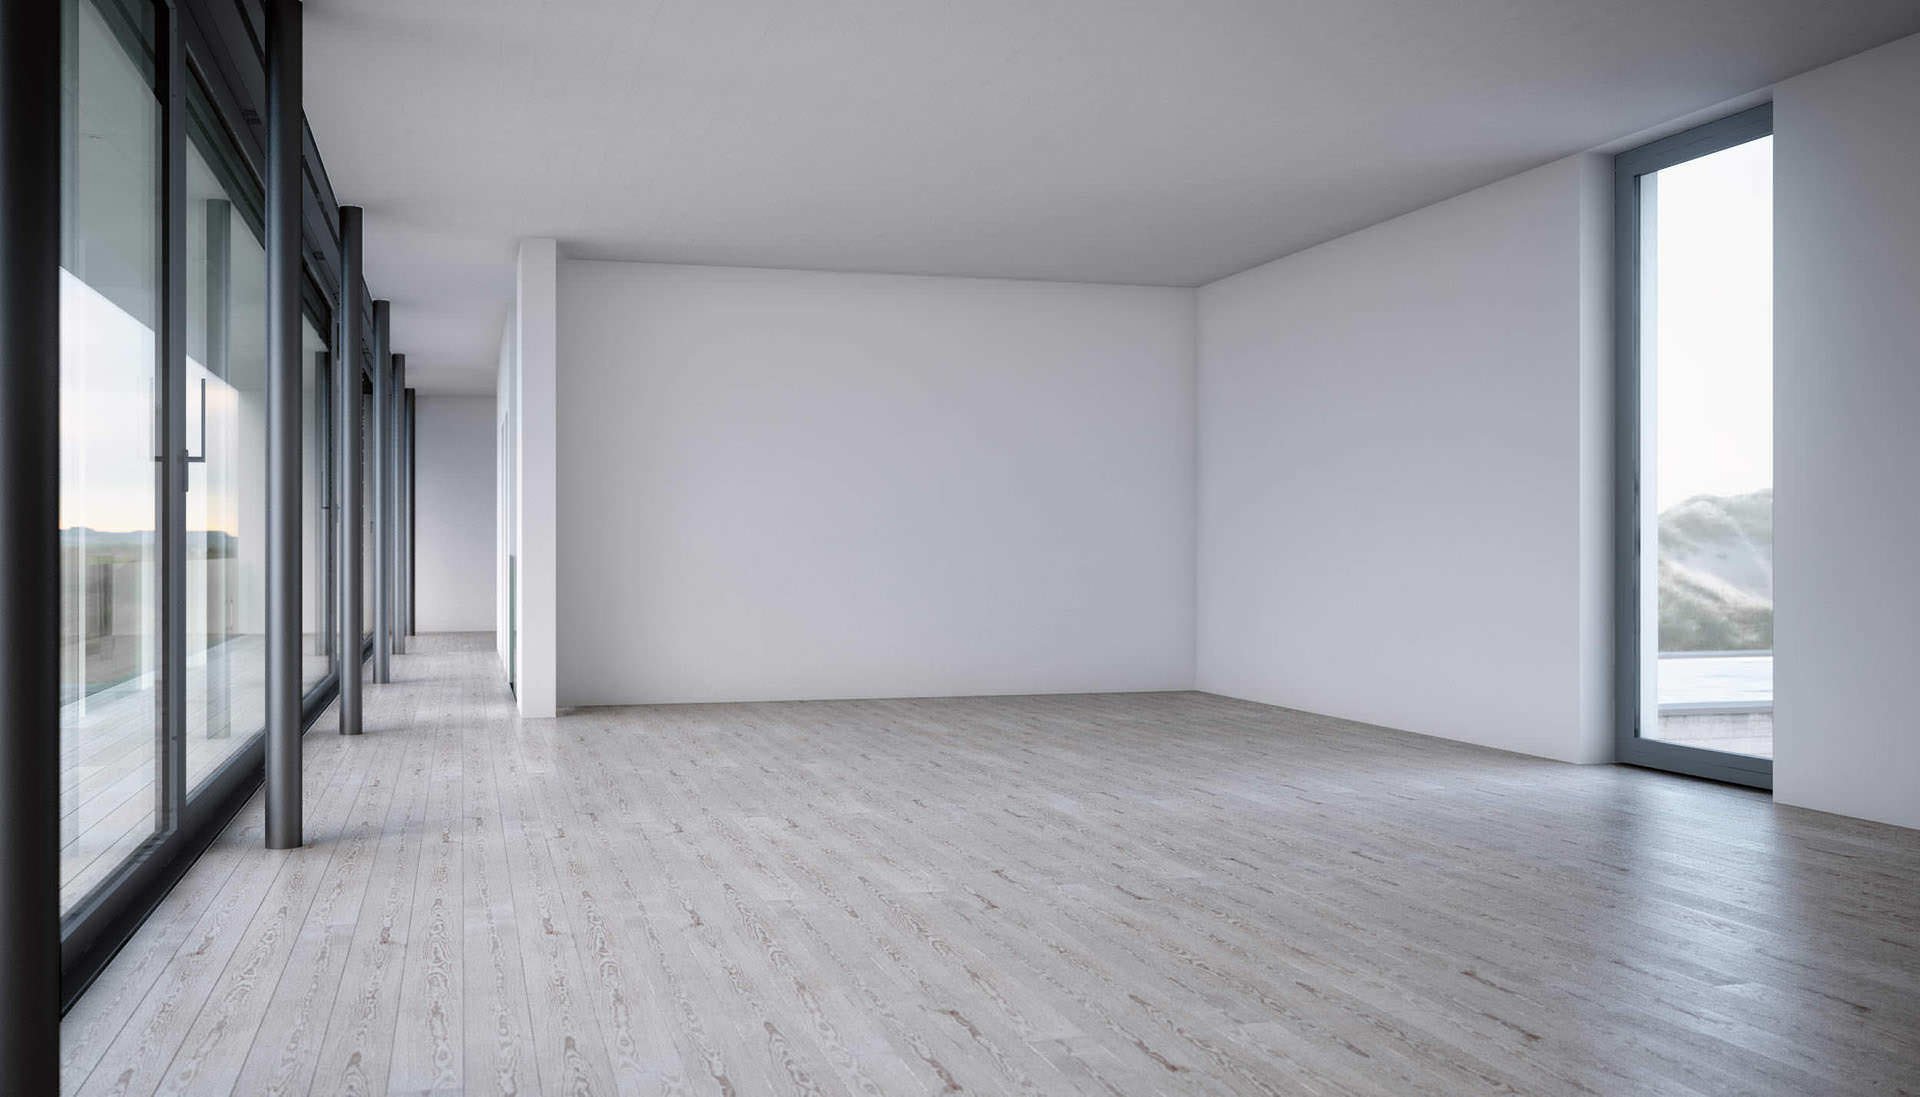 Пустая комната без мебели. Пустая комната. Интерьер без мебели. Пустой интерьер. Пустое помещение.